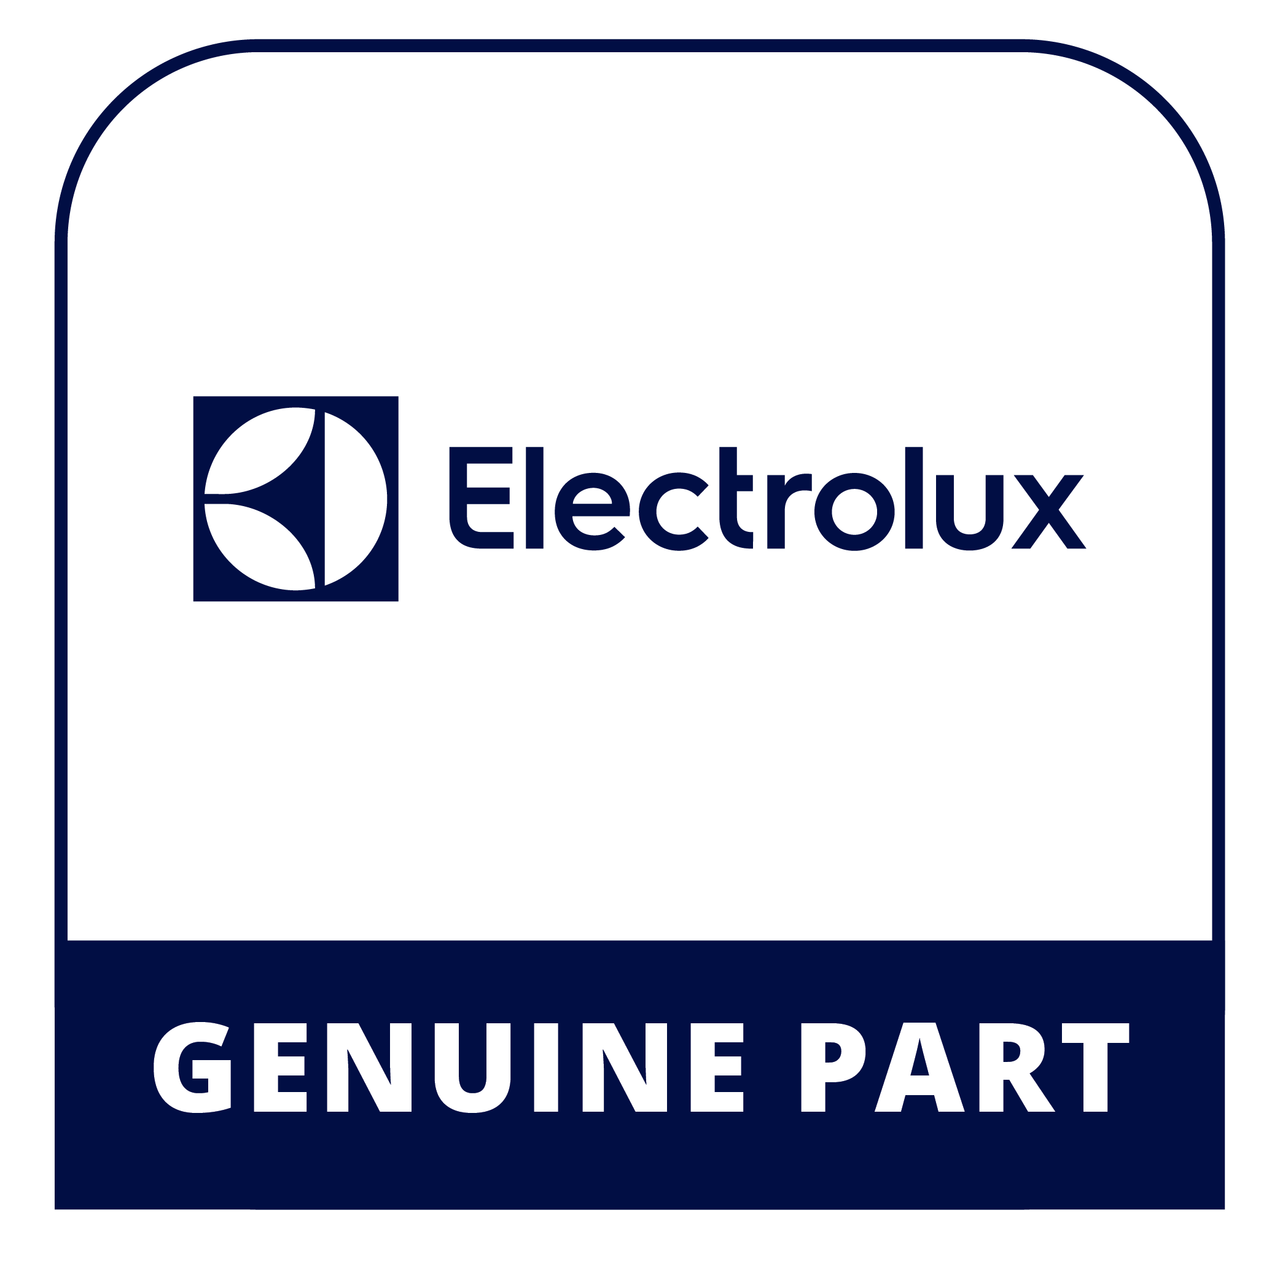 Frigidaire - Electrolux 134550702 - Frame - Genuine Electrolux Part